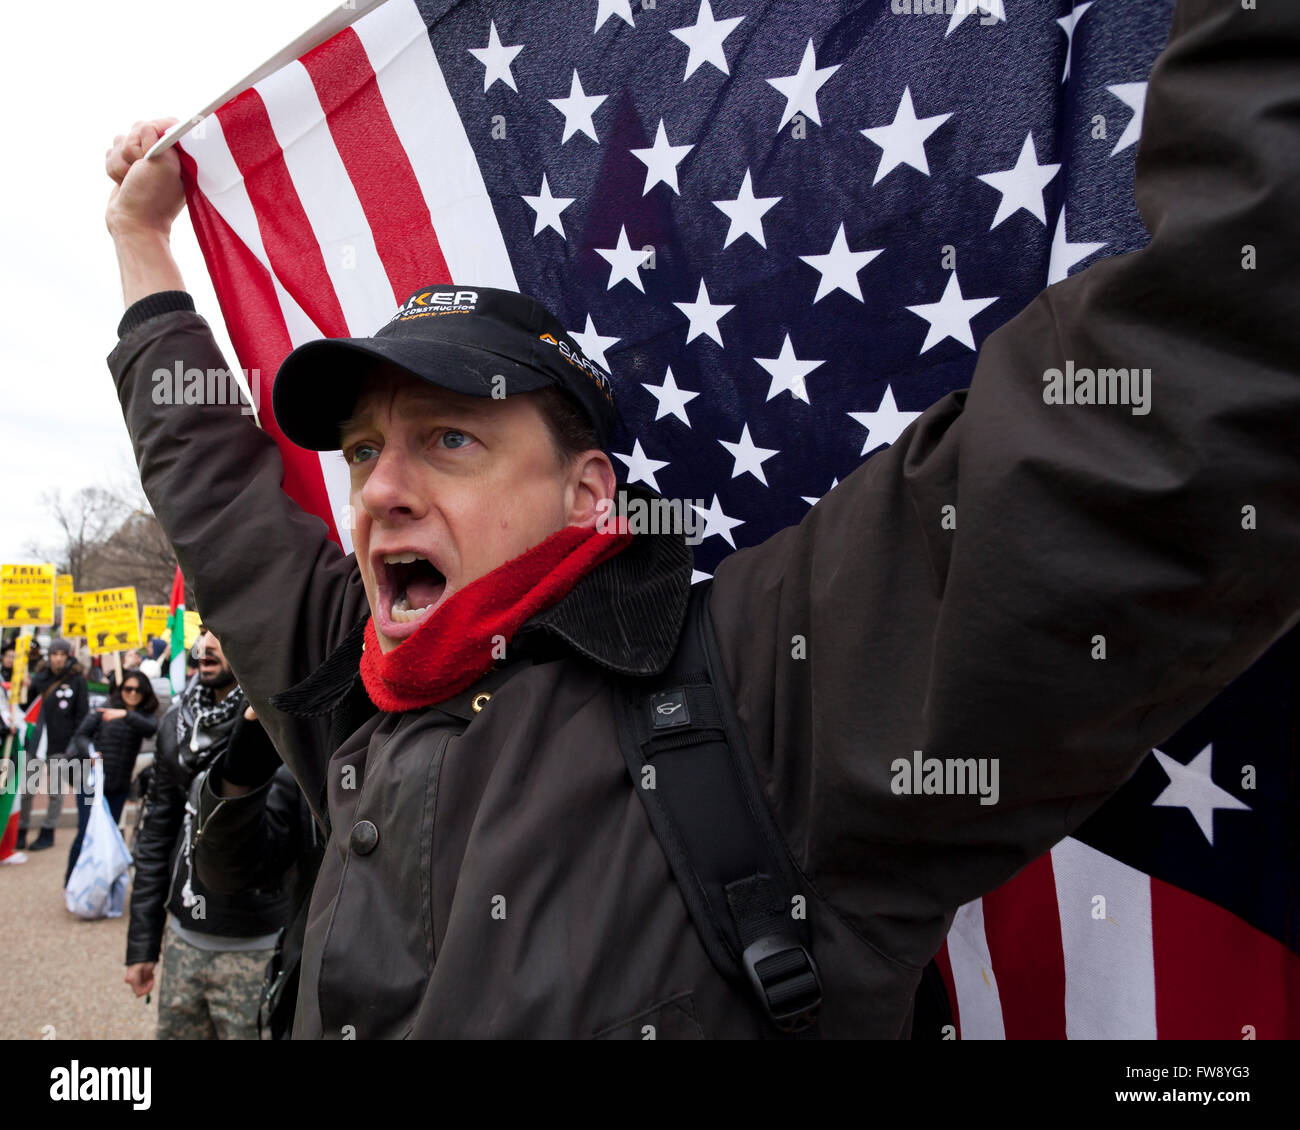 Man holding up American flag at political protest rally - Washington, DC USA Stock Photo